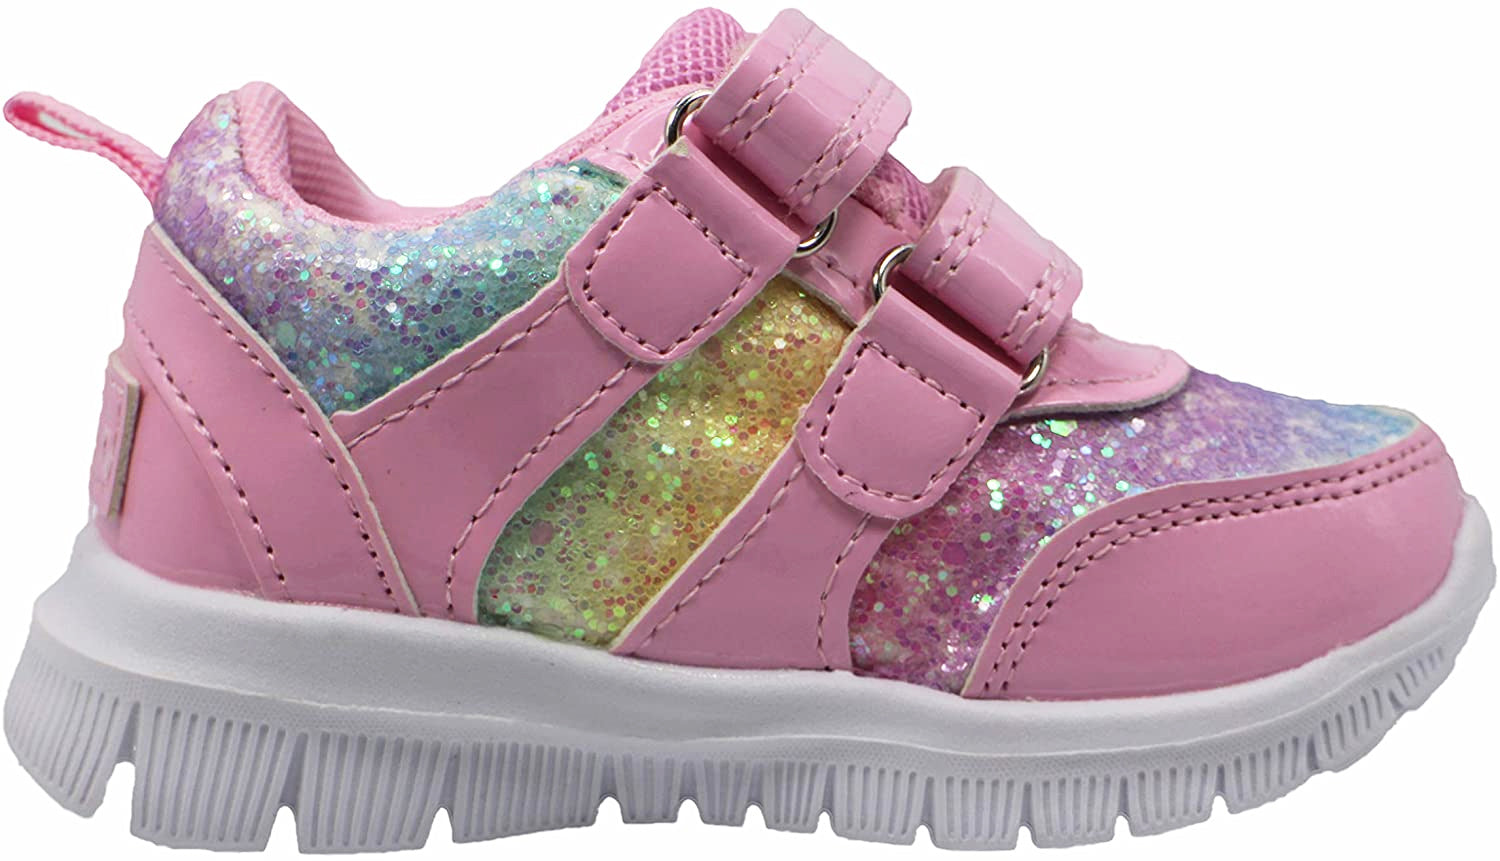 Gerber Baby Girls 9-24 Months Velcro Rainbow Sneaker